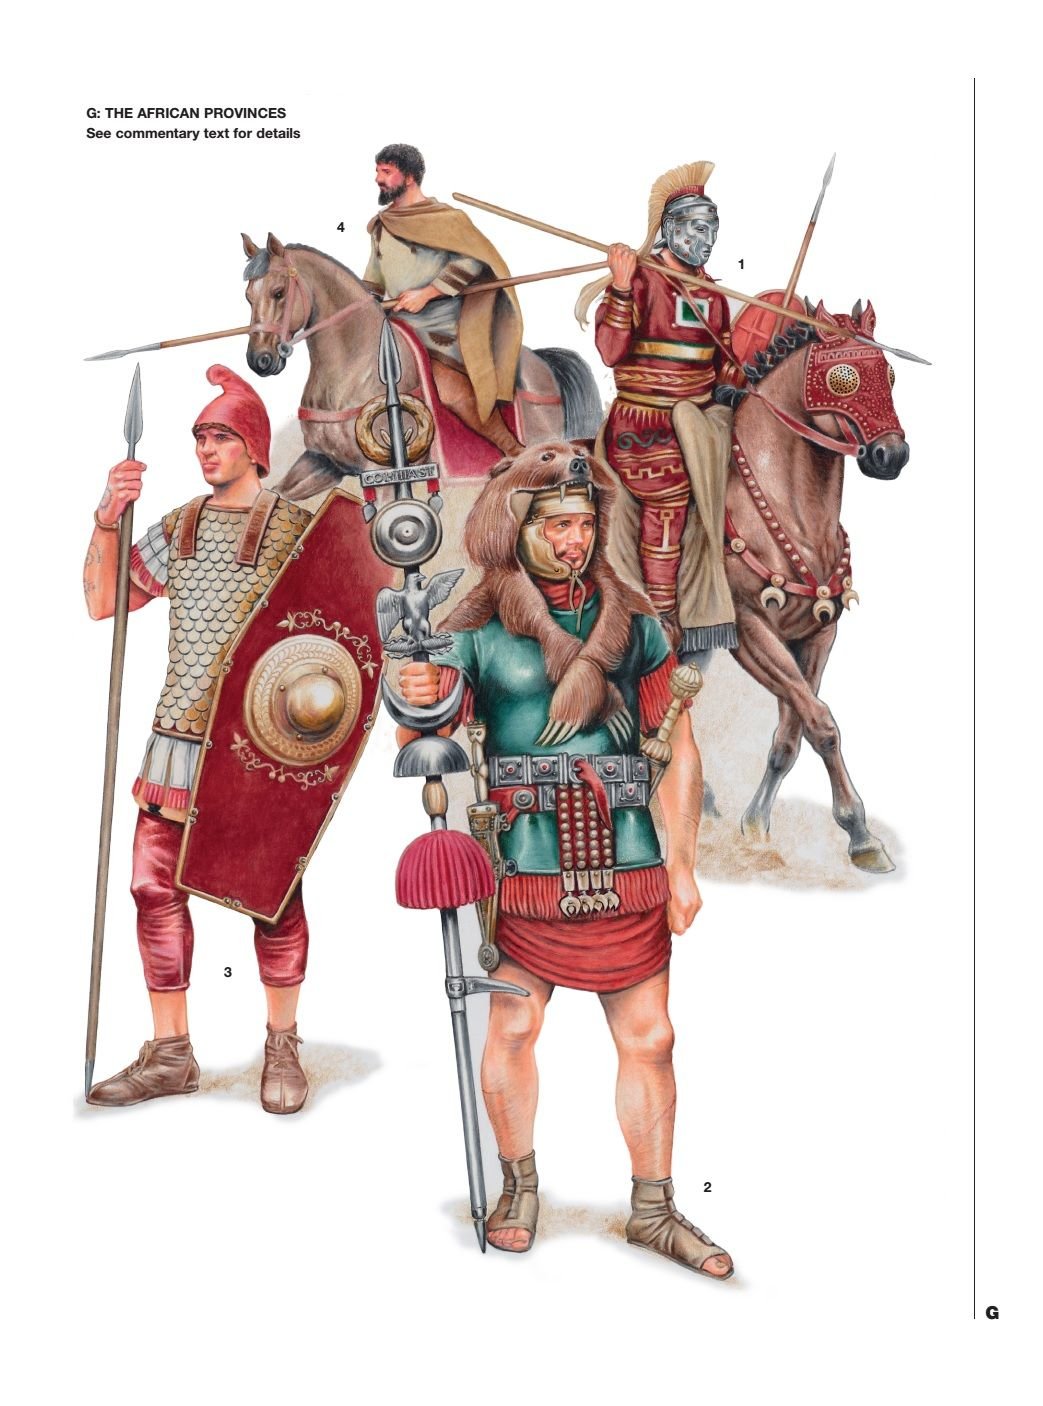 Кто служил в римских легионах. Древний Рим армия Легионы. Армия древнего Рима легионеры. Римская армия 1 век до н.э. Древнеримская армия Легион.